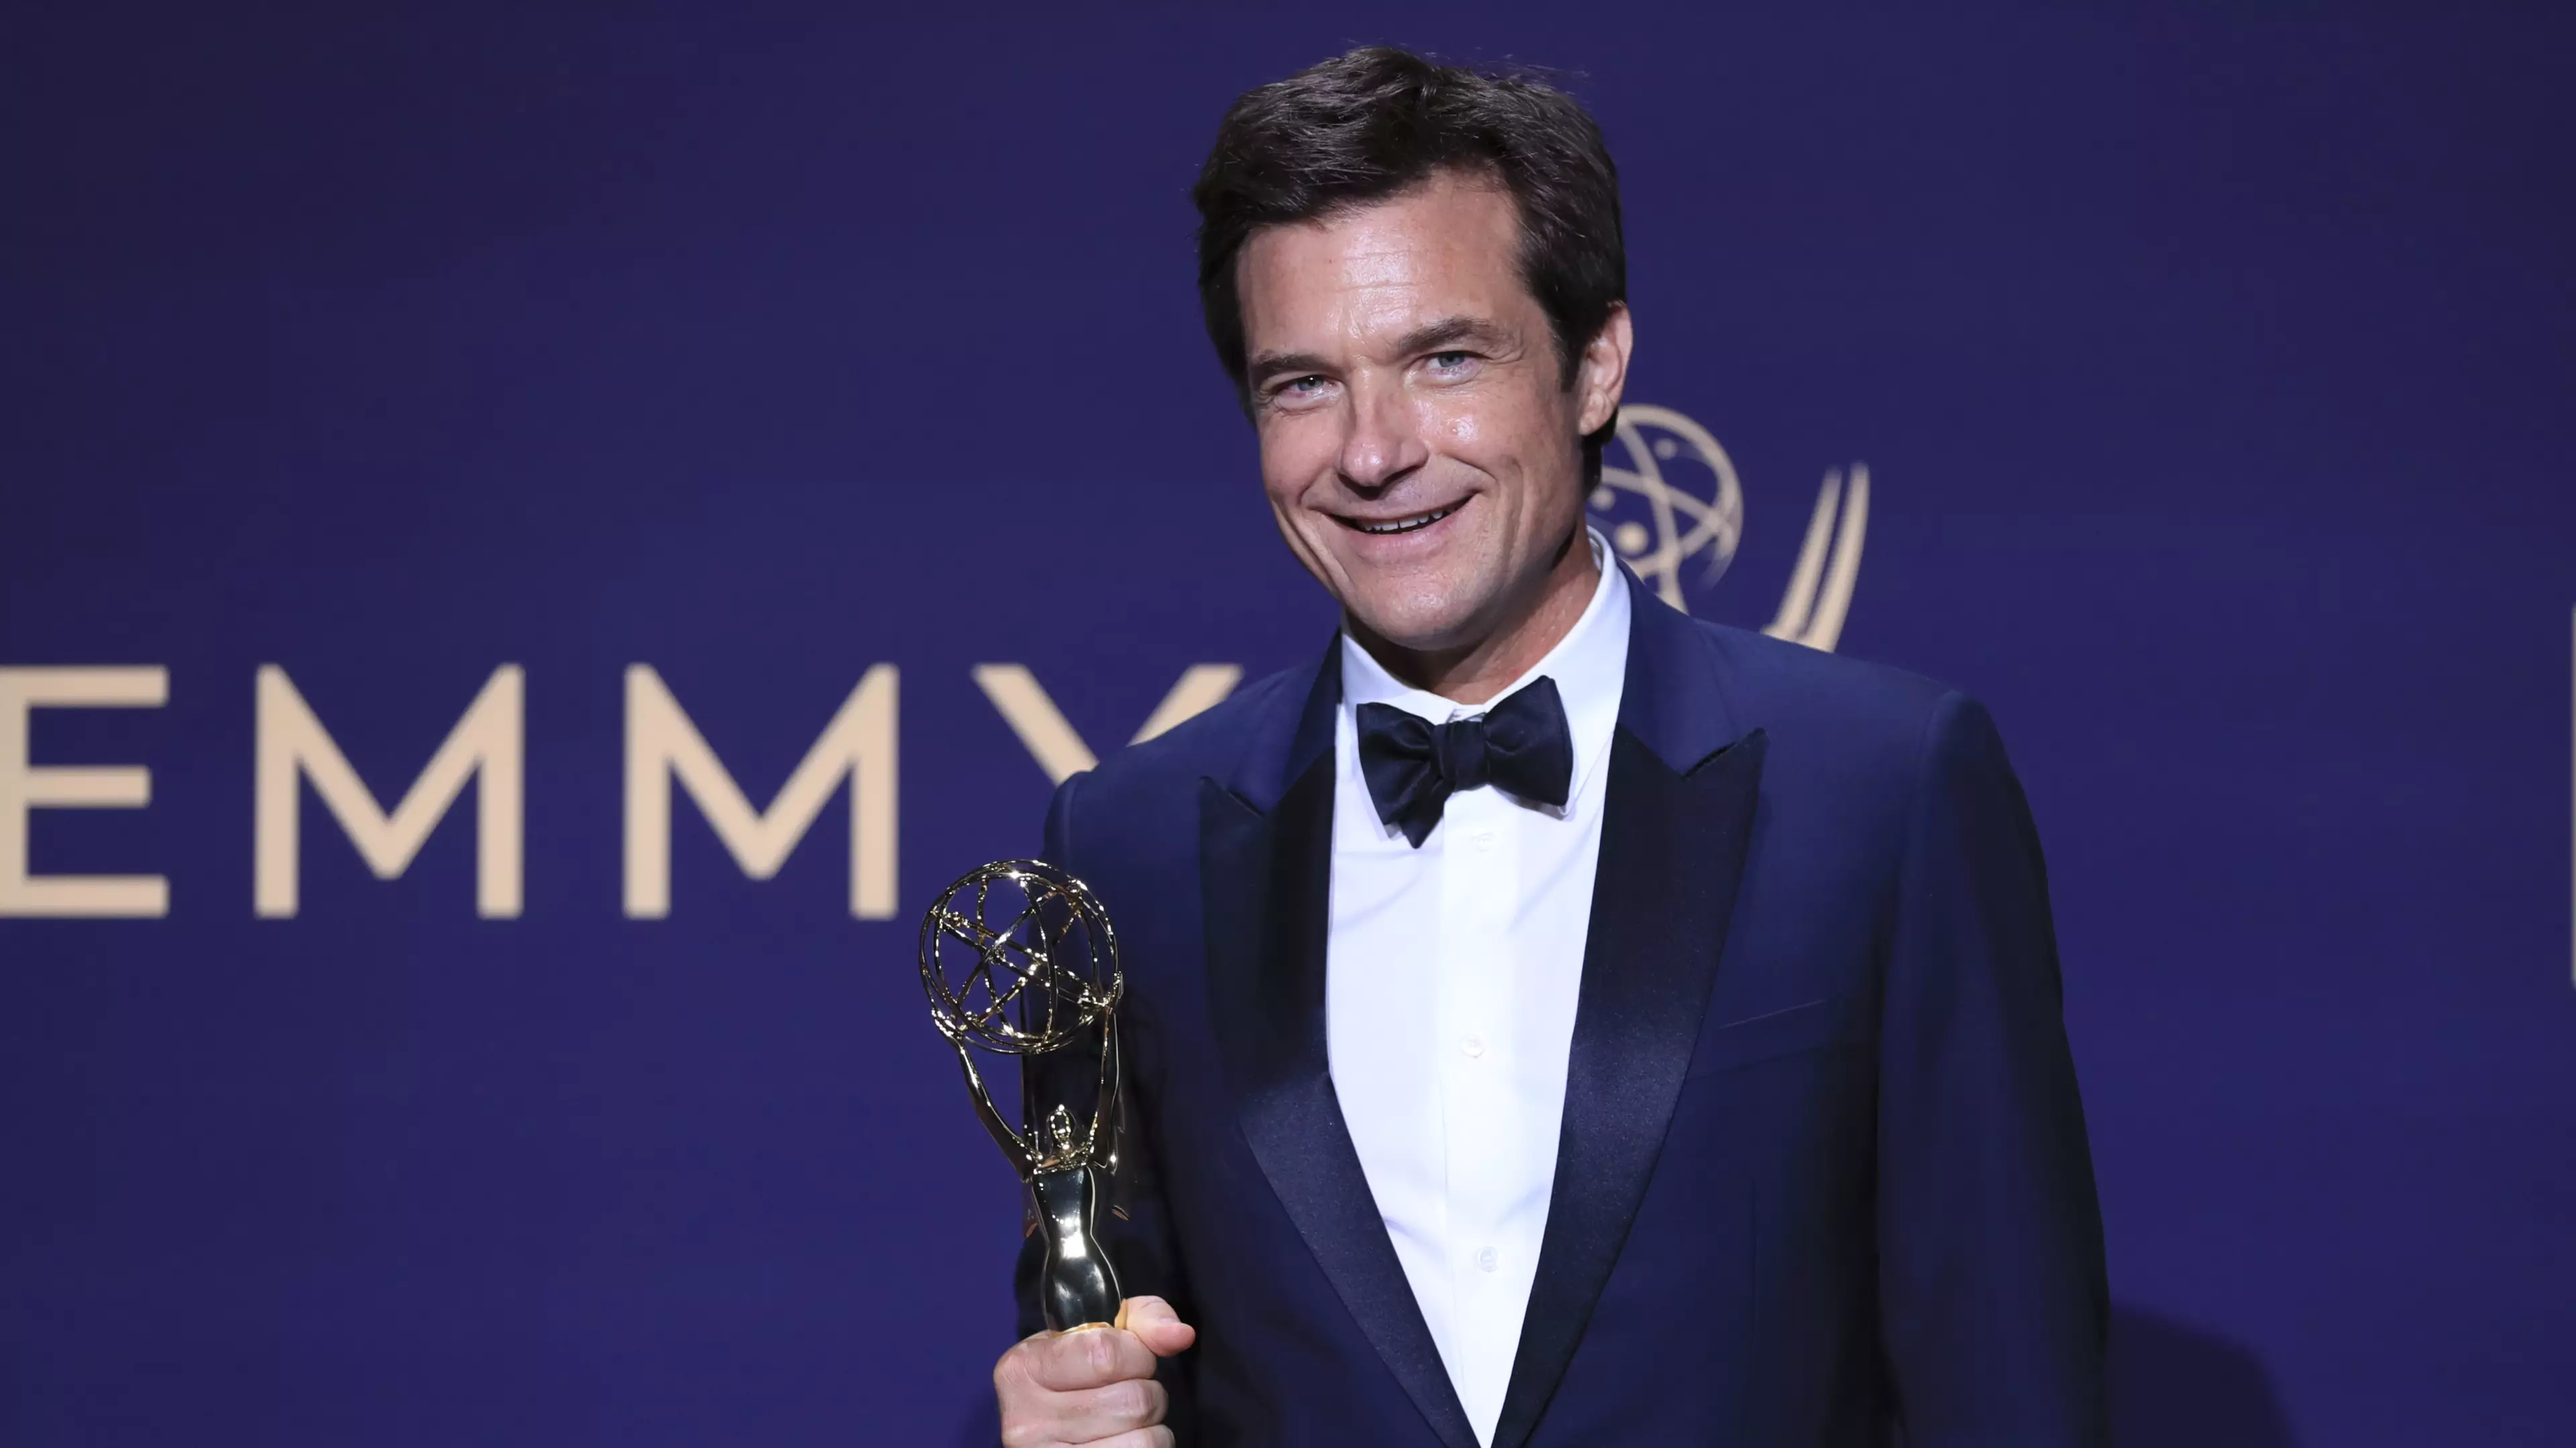 Jason Bateman Incorrectly Announced As Winner At Last Night's Emmy Awards